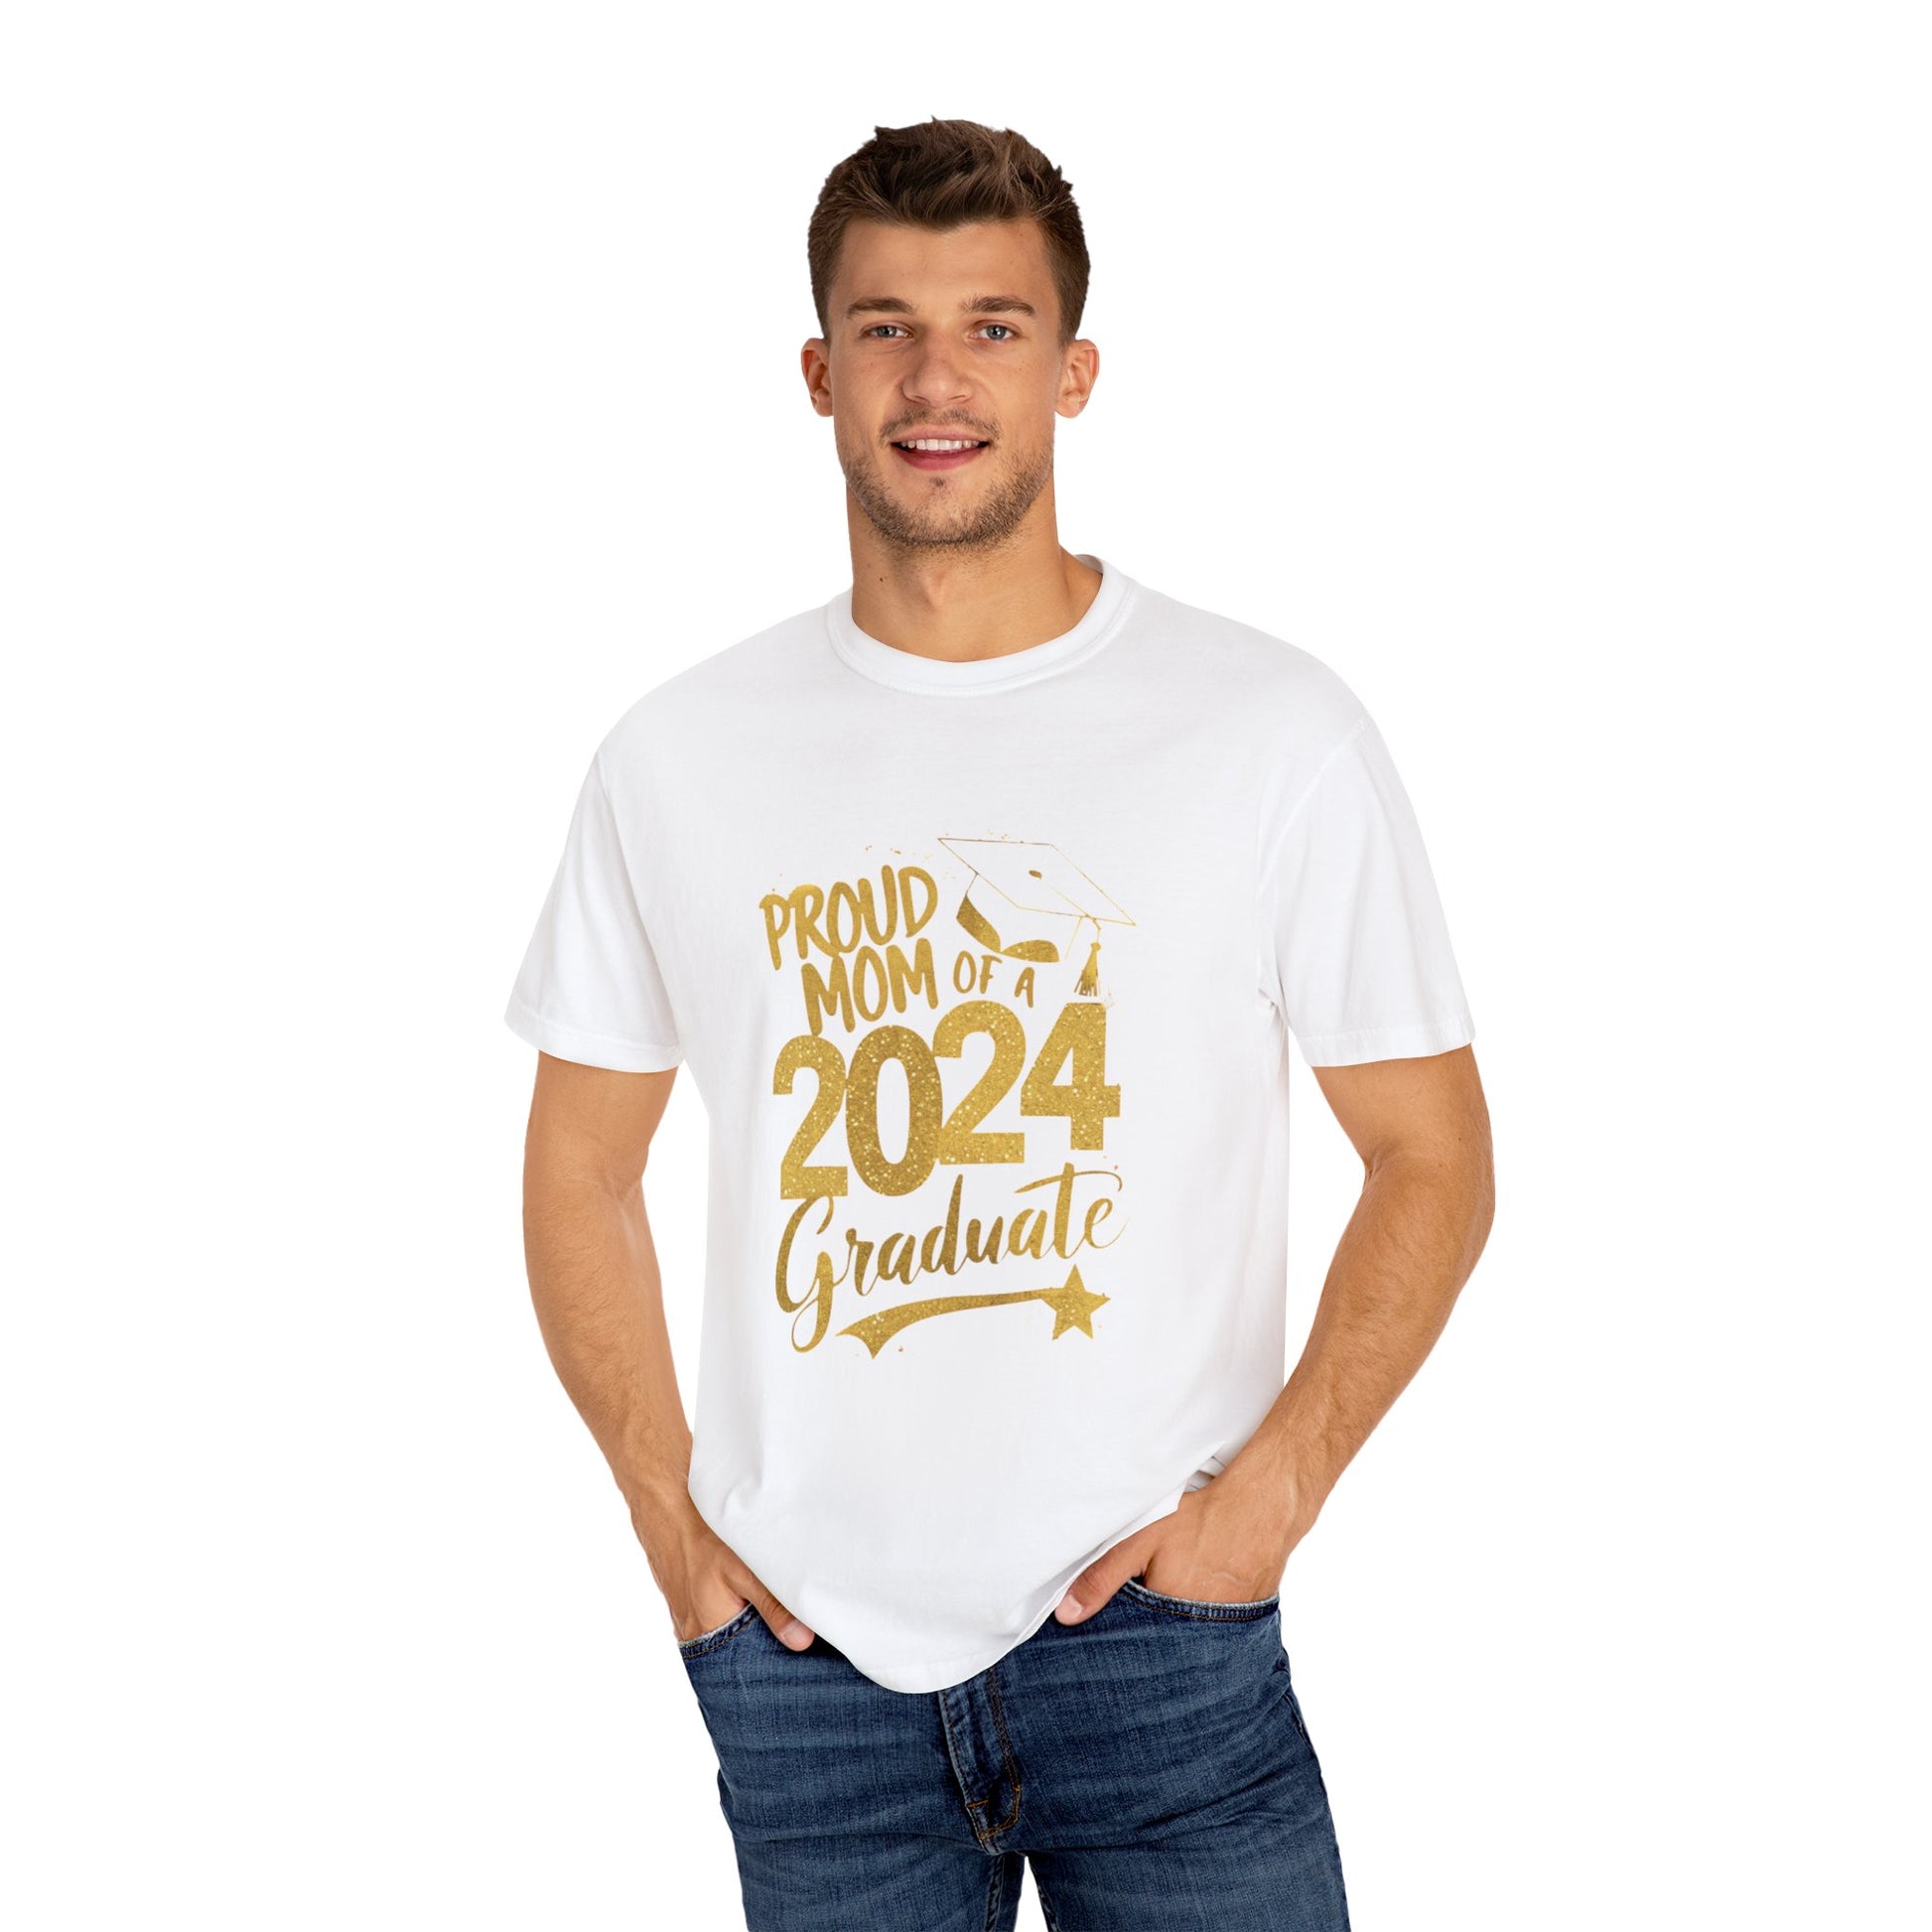 Proud of Mom 2024 Graduate Unisex Garment-dyed T-shirt Cotton Funny Humorous Graphic Soft Premium Unisex Men Women White T-shirt Birthday Gift-24